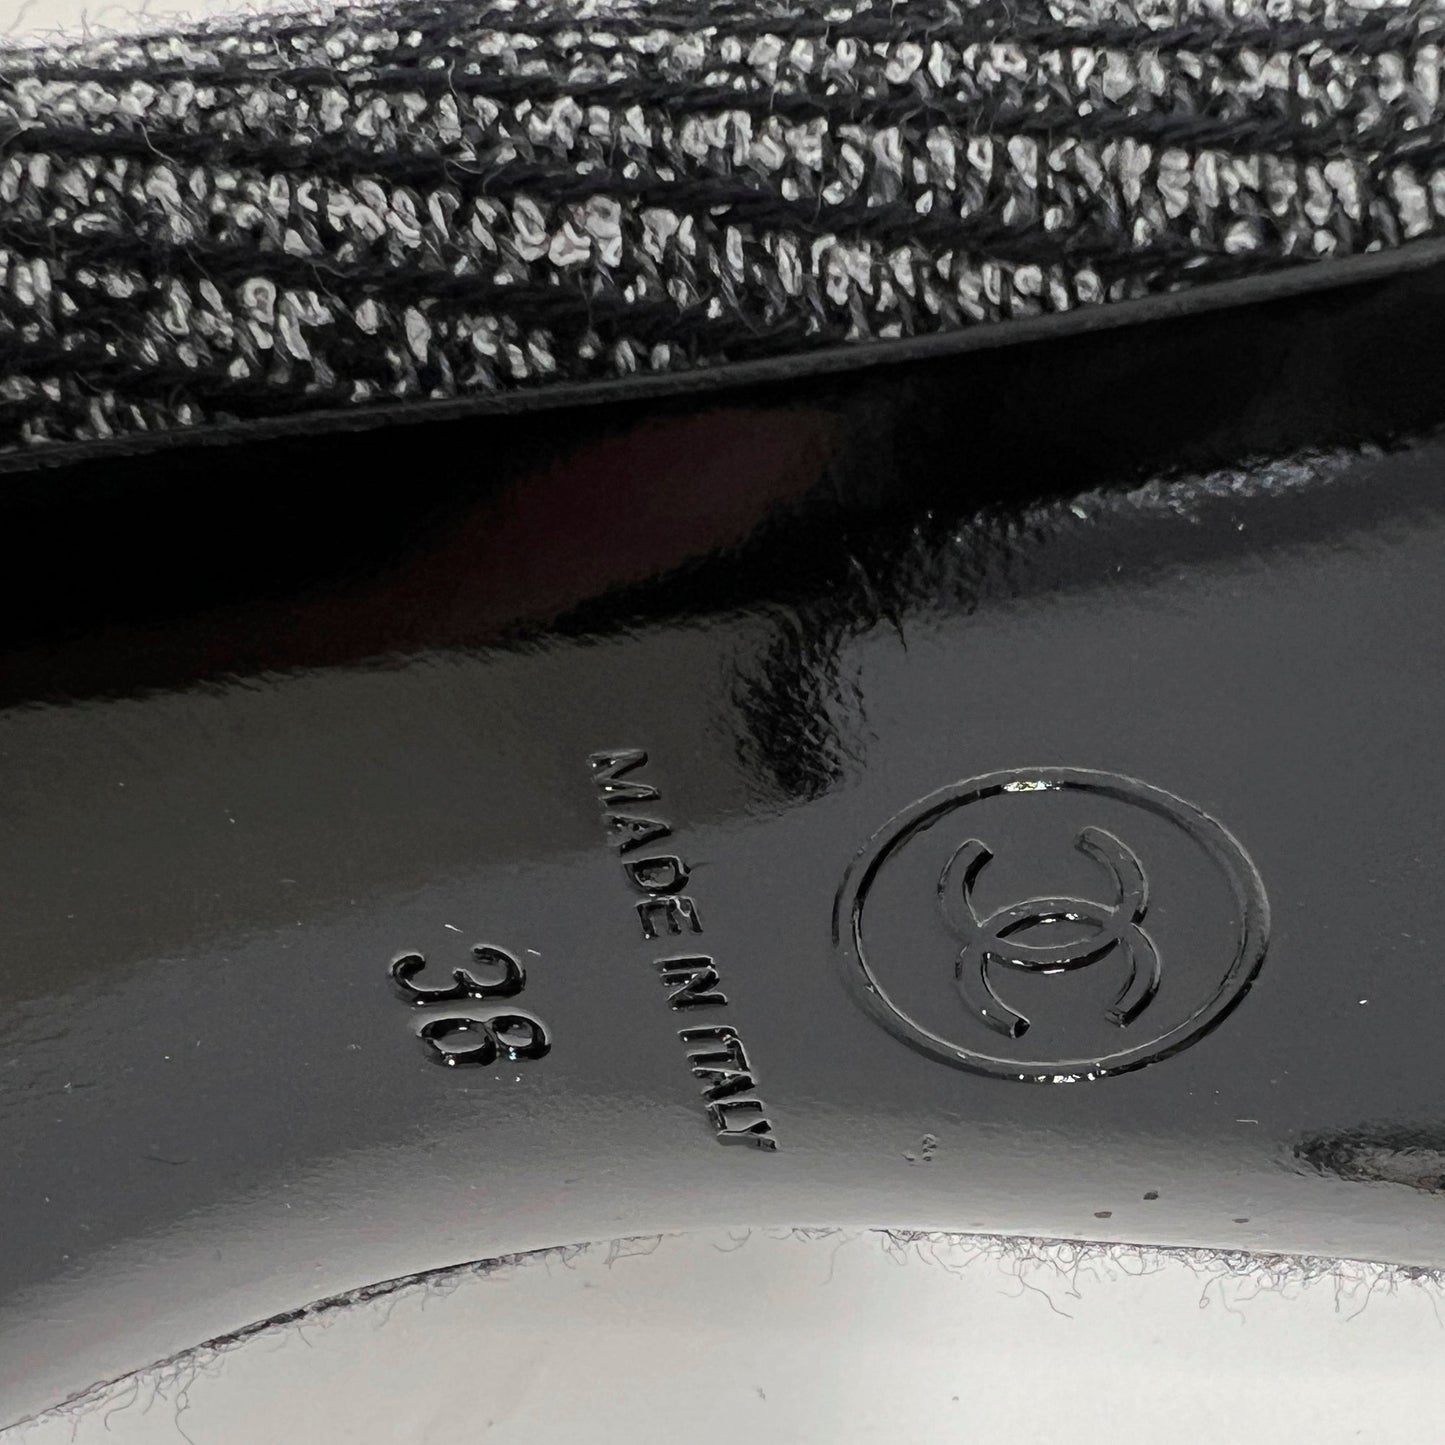 Chanel Tweed Wool Grey Black Cap Toe Round Pumps White Chanel Logo Heels Pumps Size EU 38